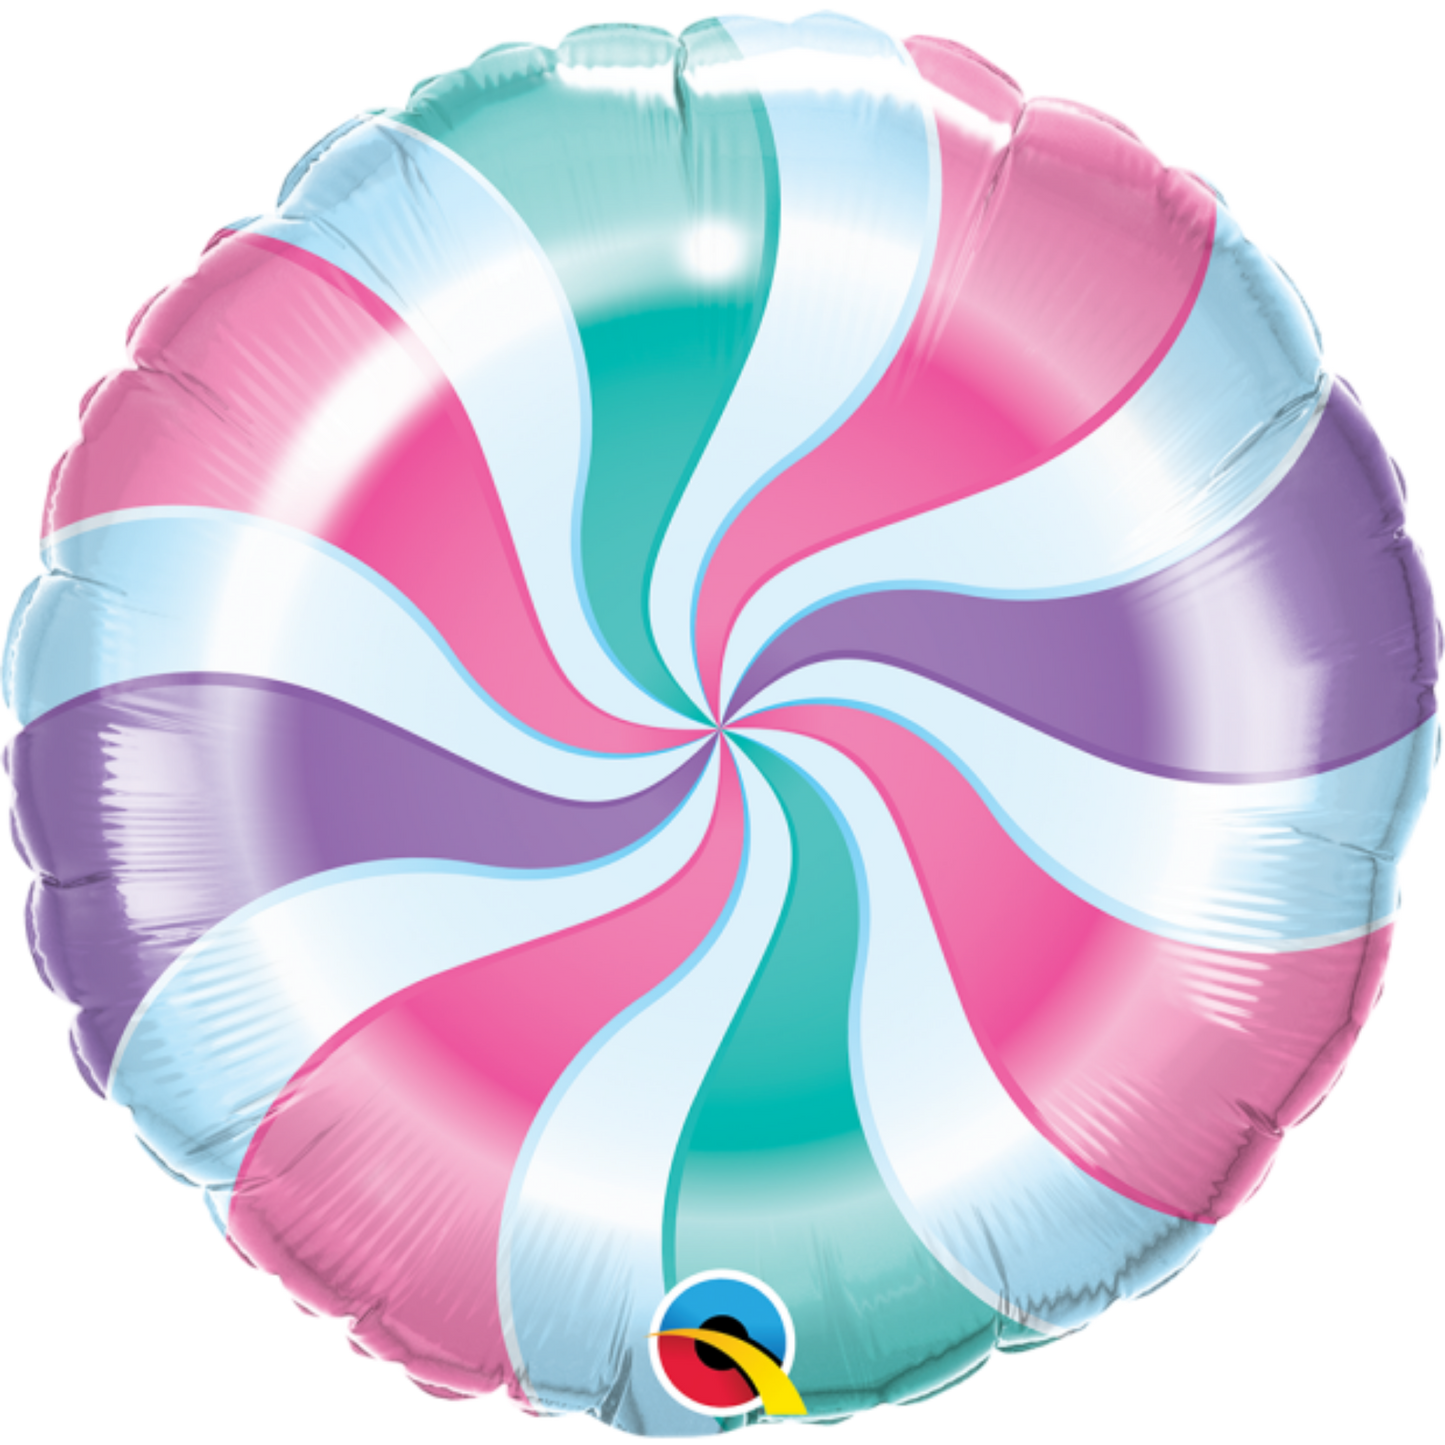 Candy Pastel Swirl